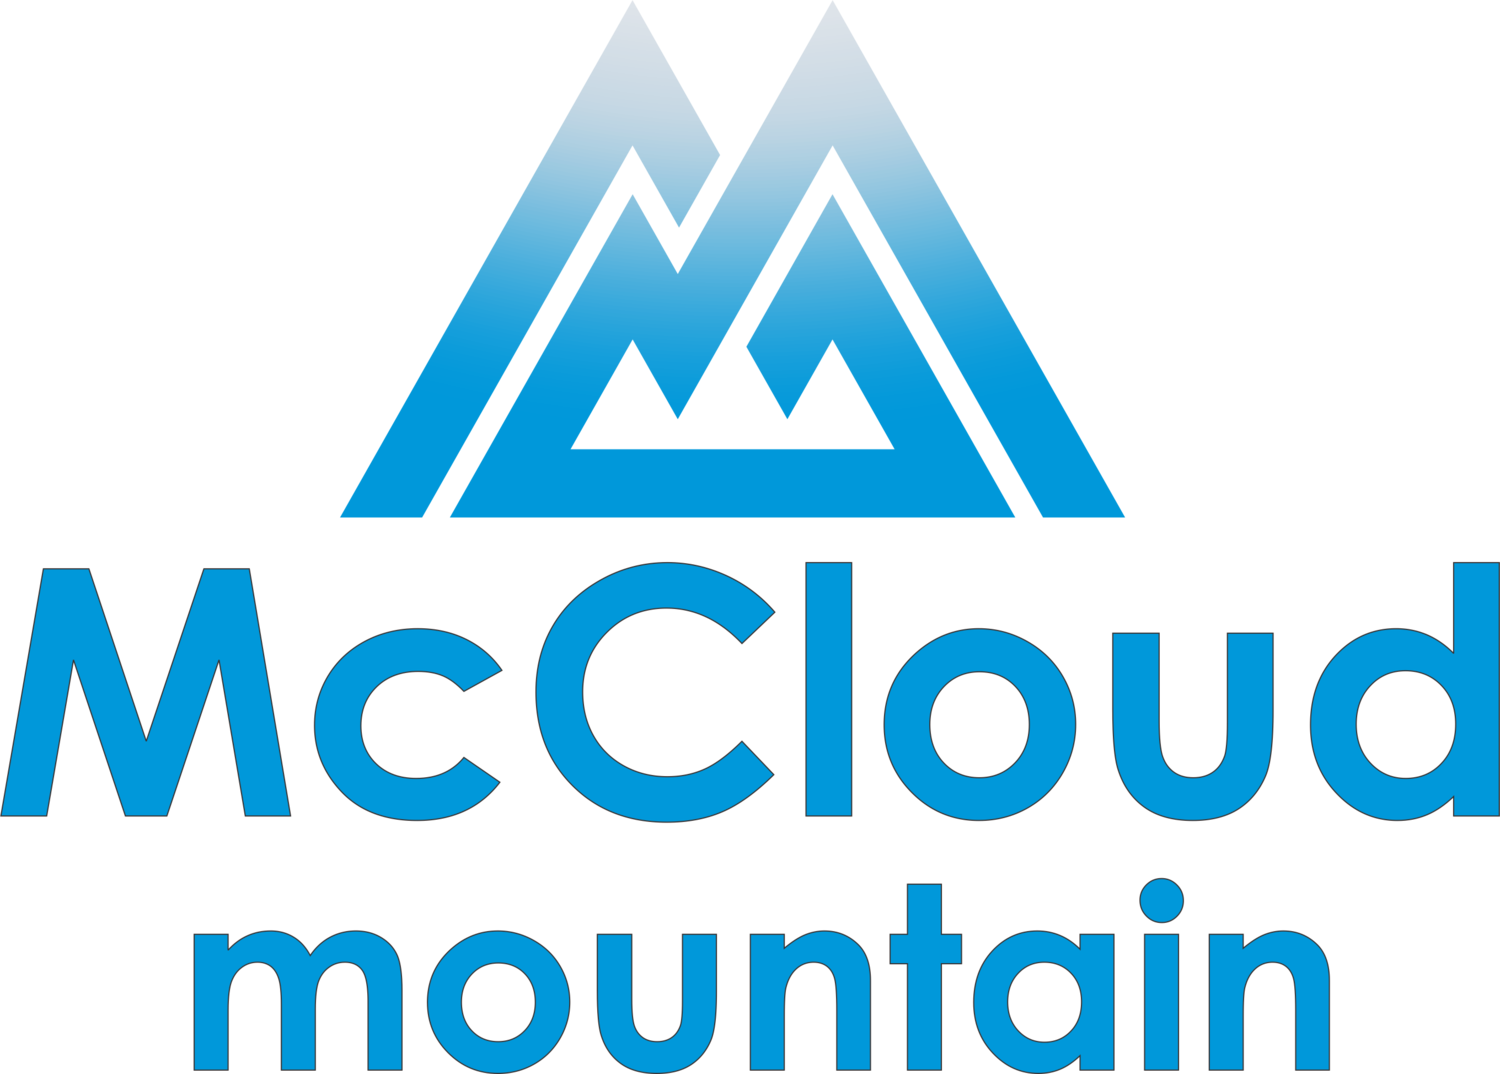 McCloud Mountain